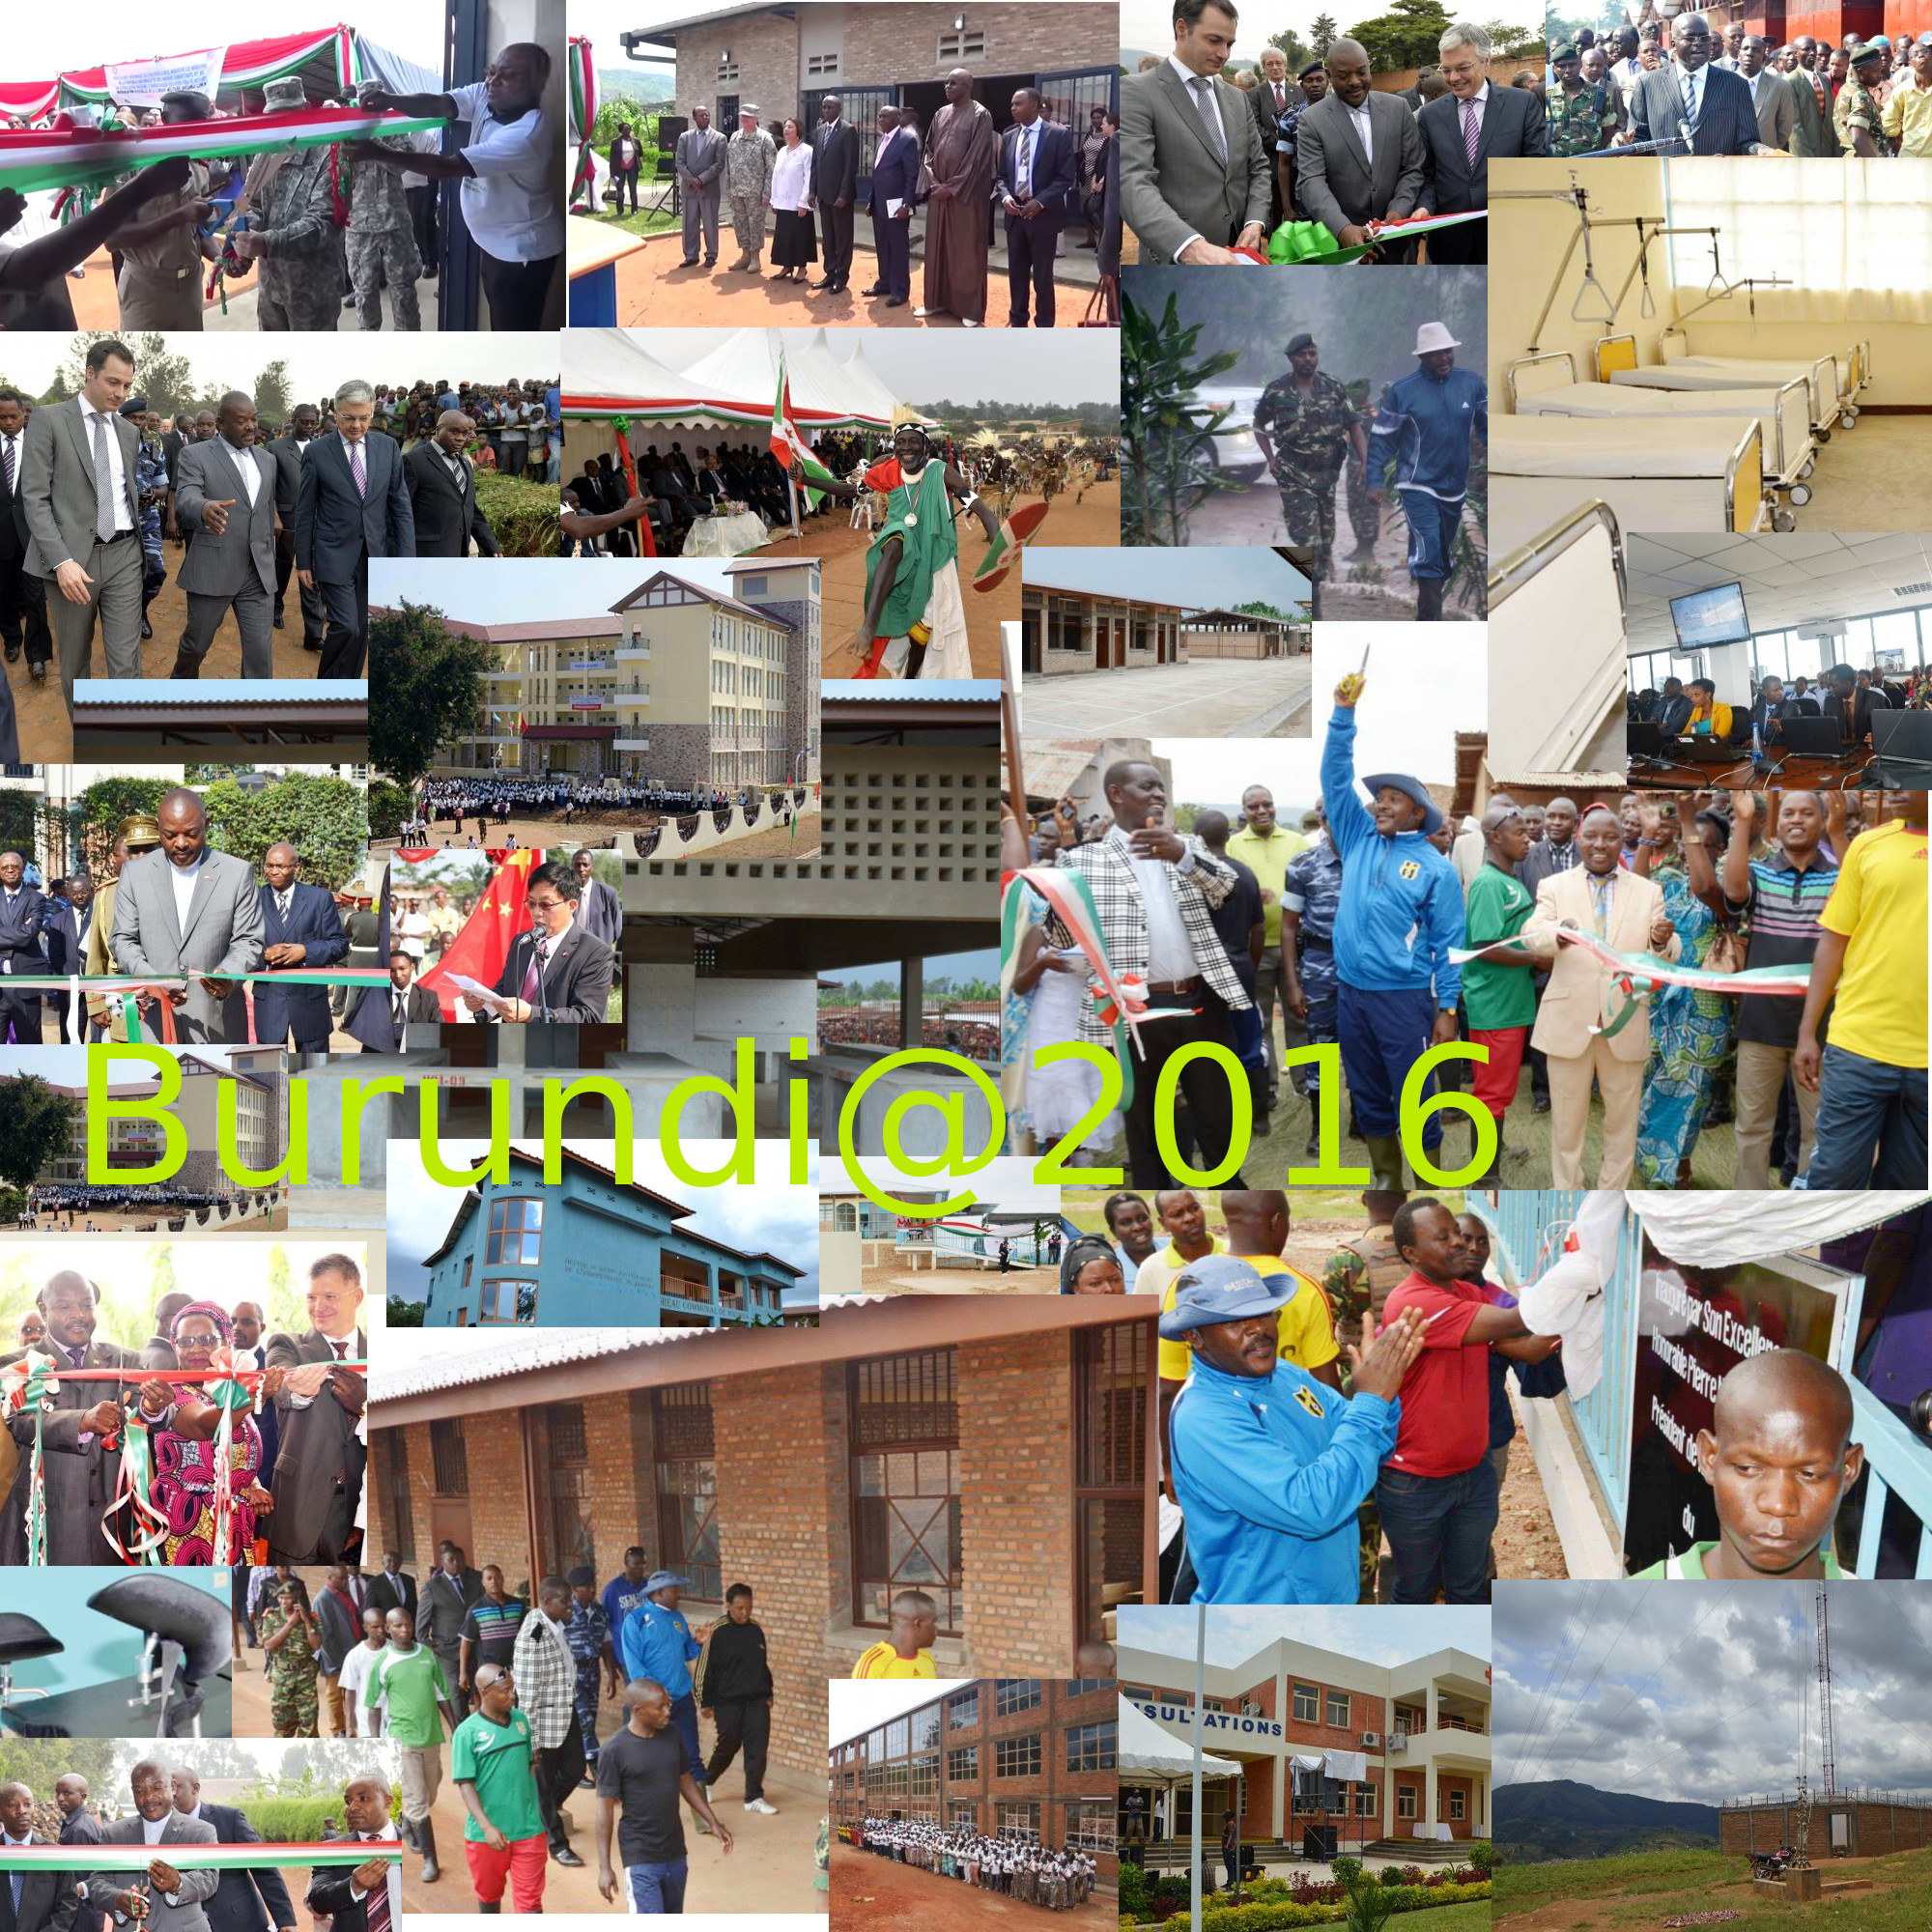 Les inaugurations de 2015 au Burundi